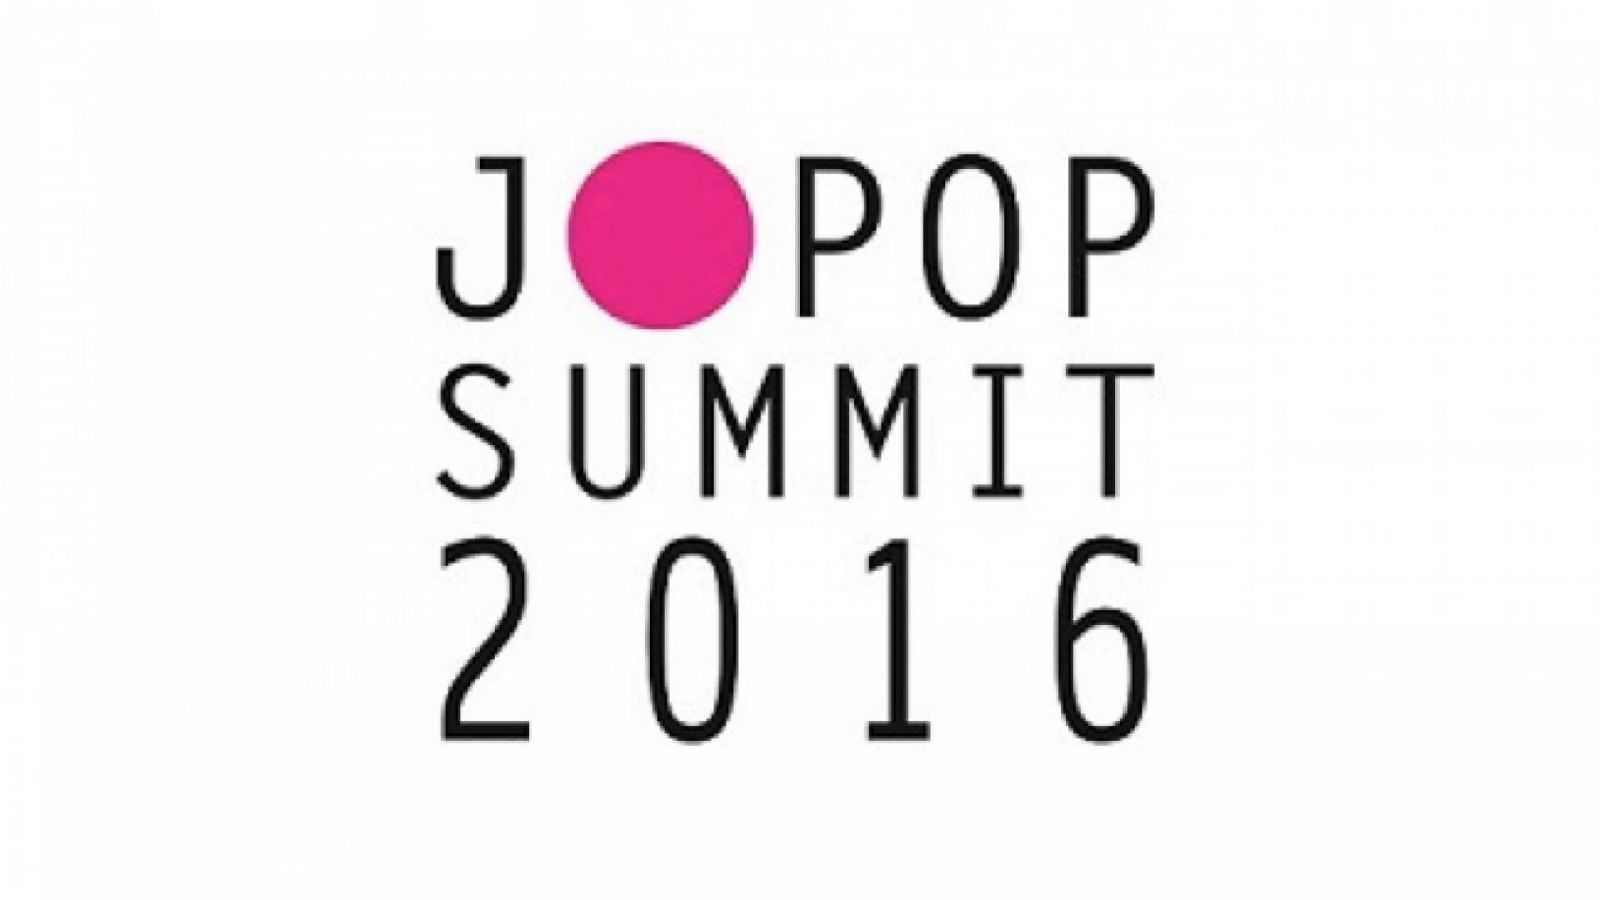 J-POP SUMMIT 2016 Announces Advance Ticket Sales and VIP Packages © J-POP SUMMIT 2016